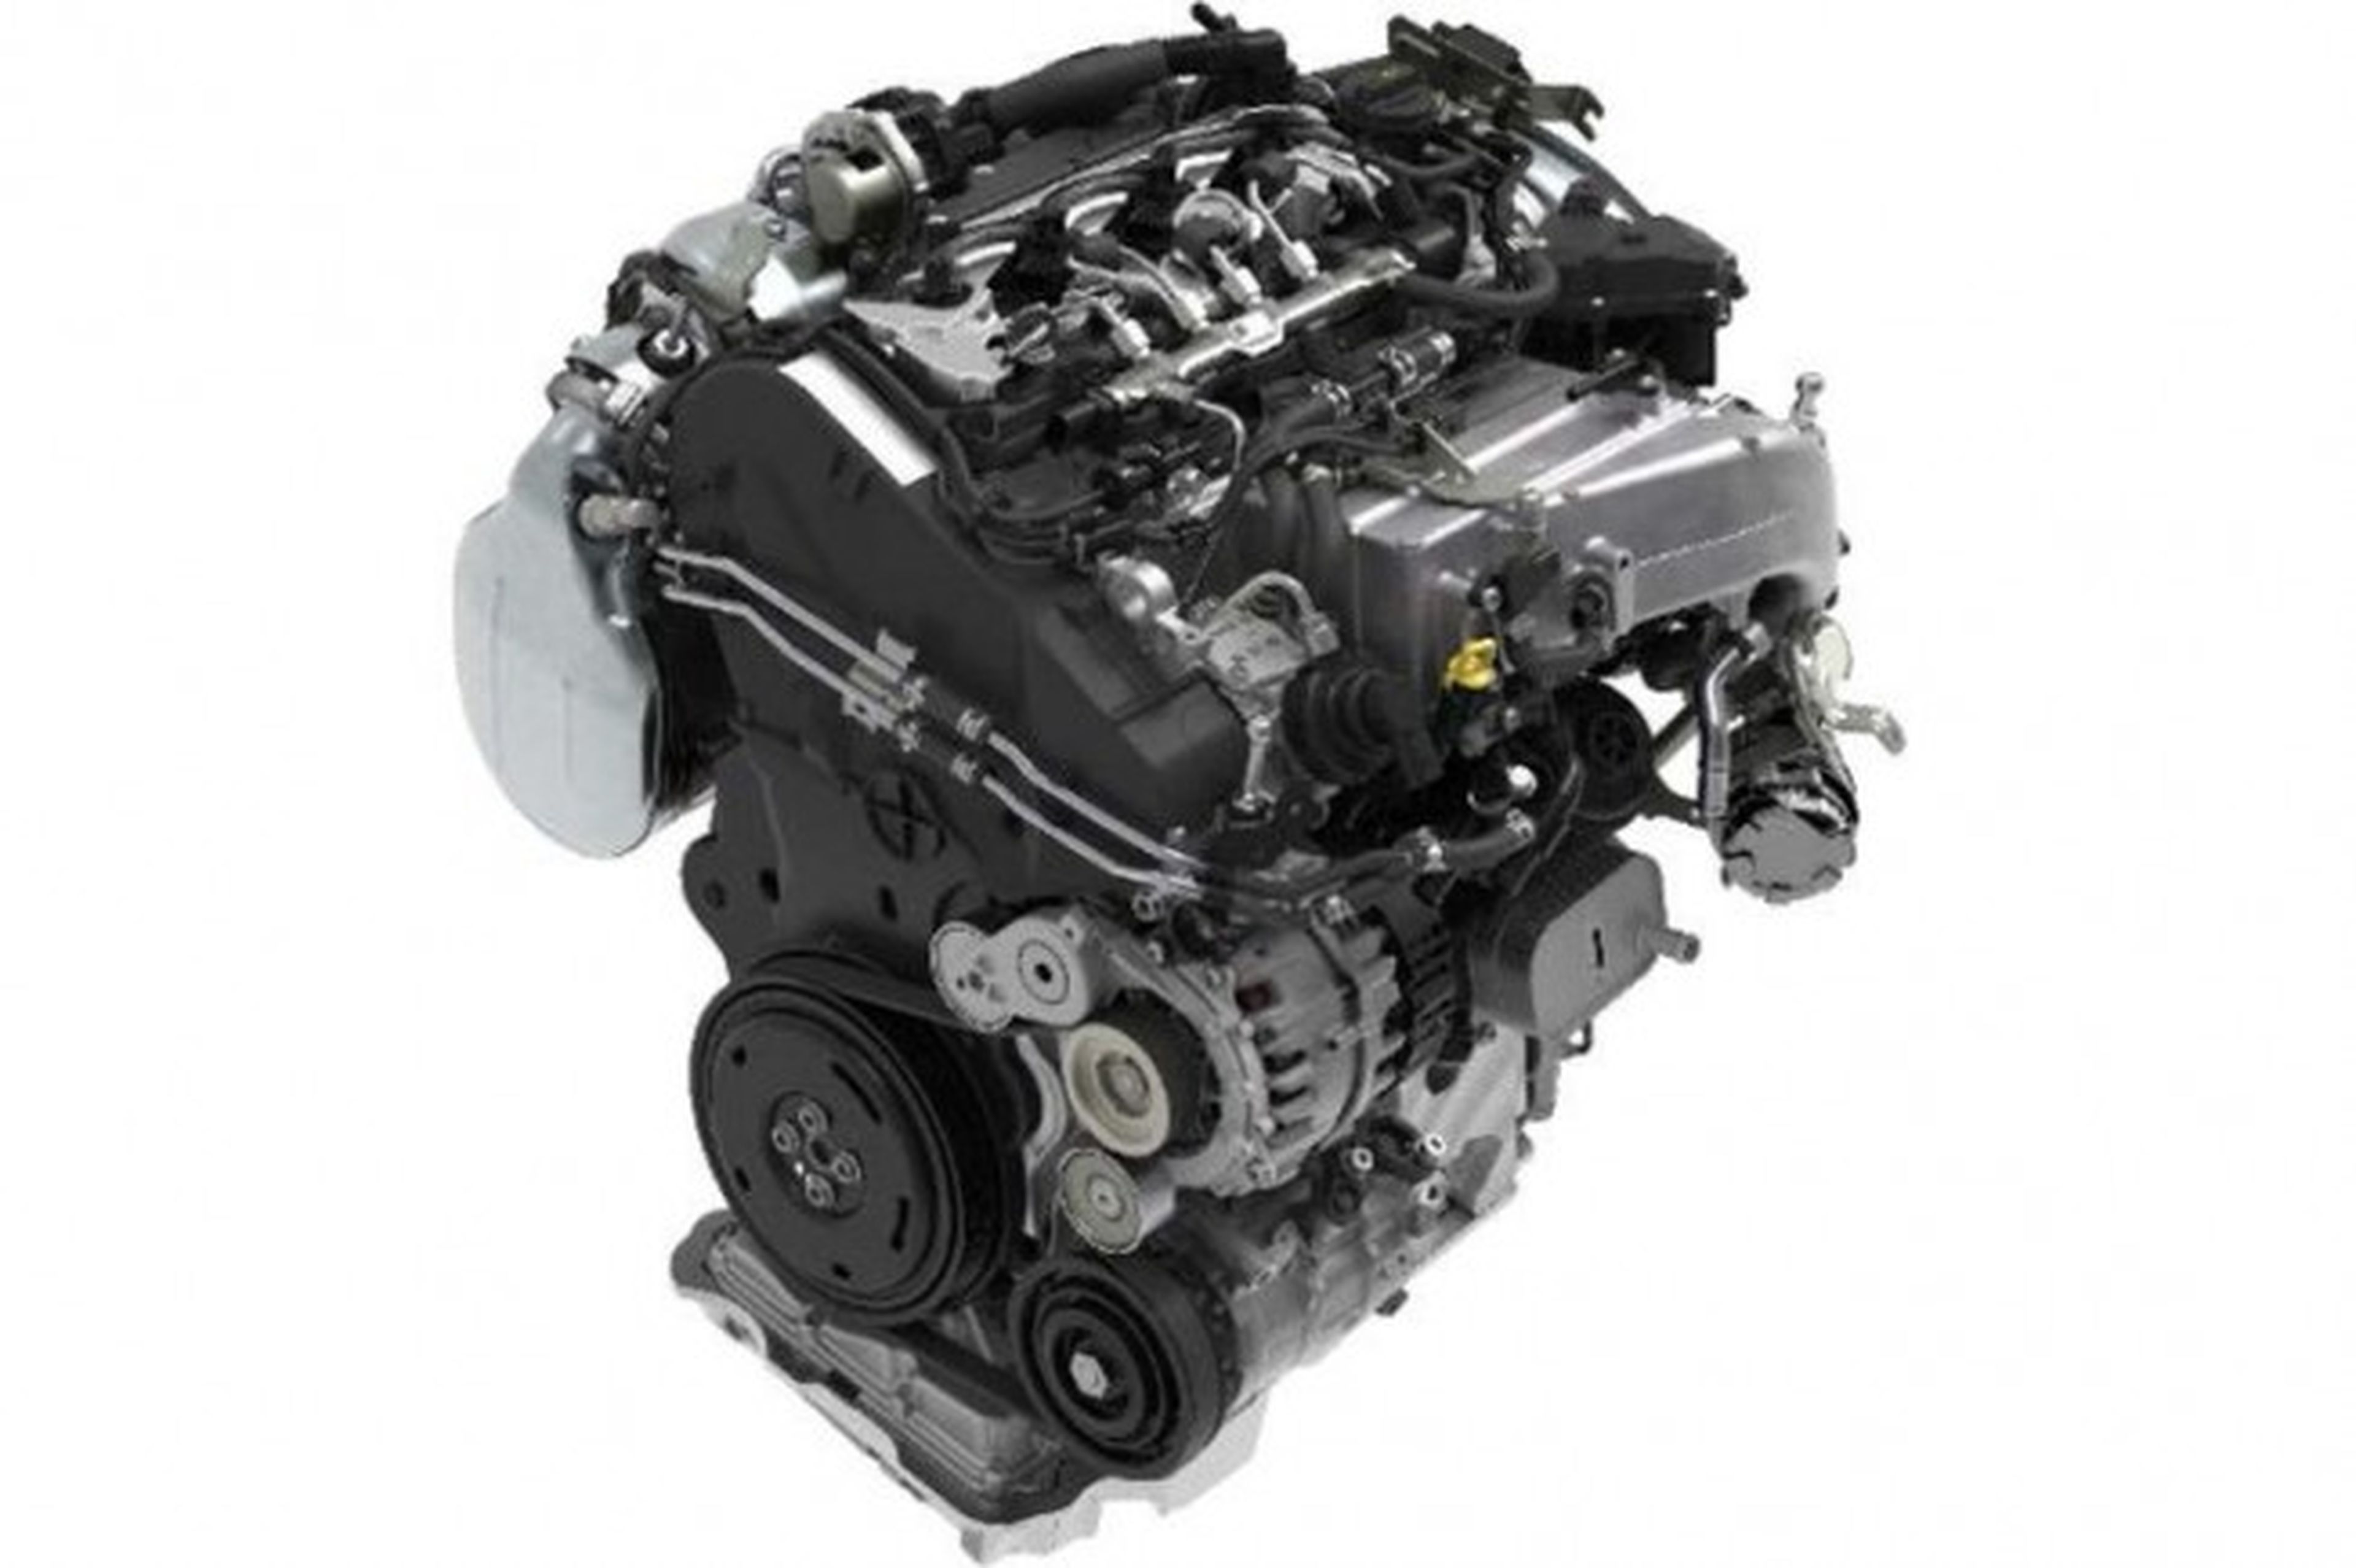 Nuevo motor 2.0 TDI EVO de Volkswagen